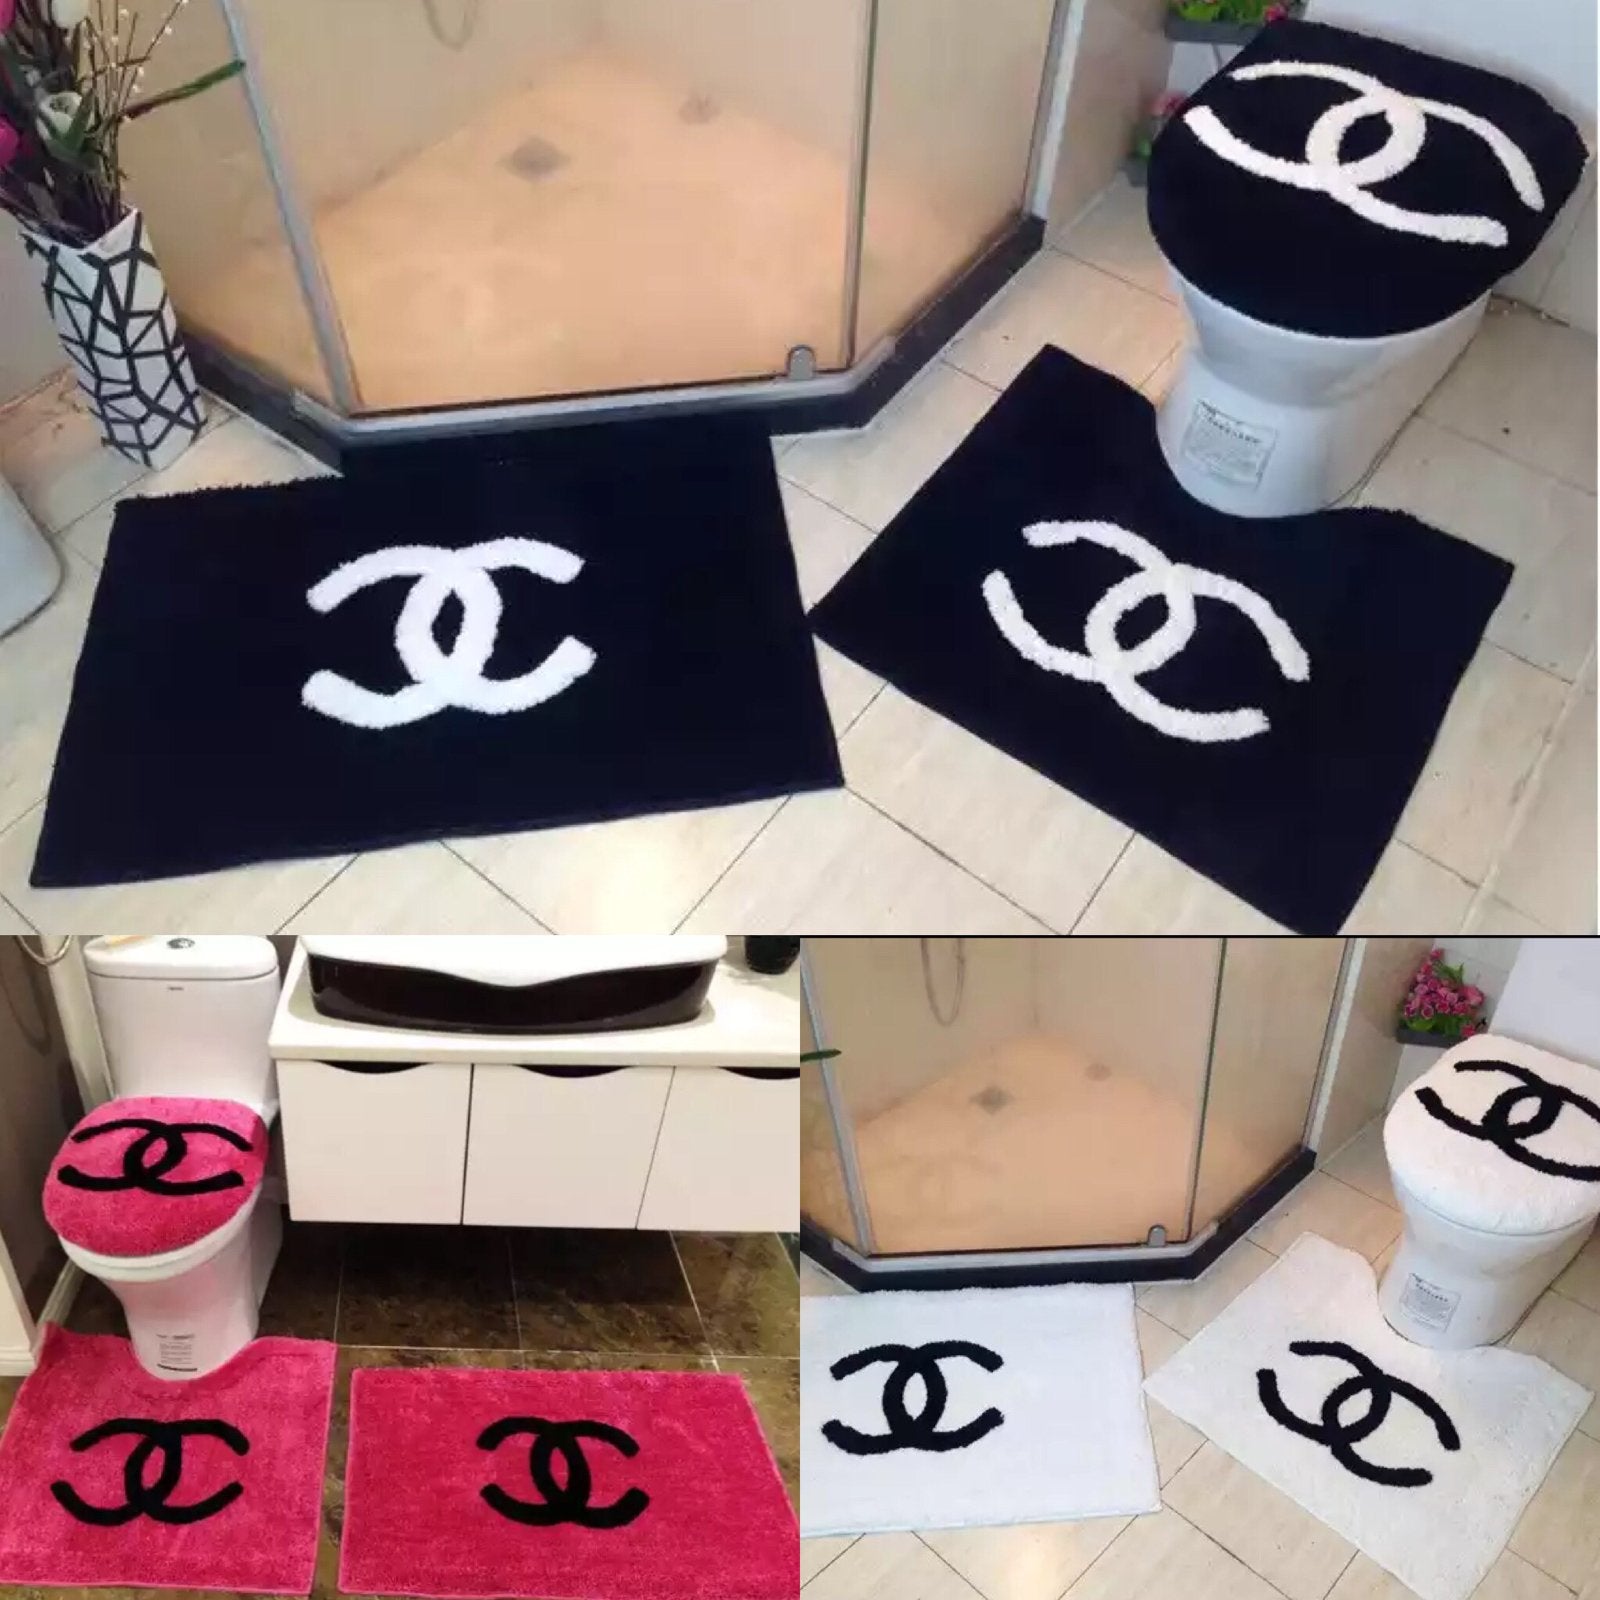  Chanel Bathroom Decor